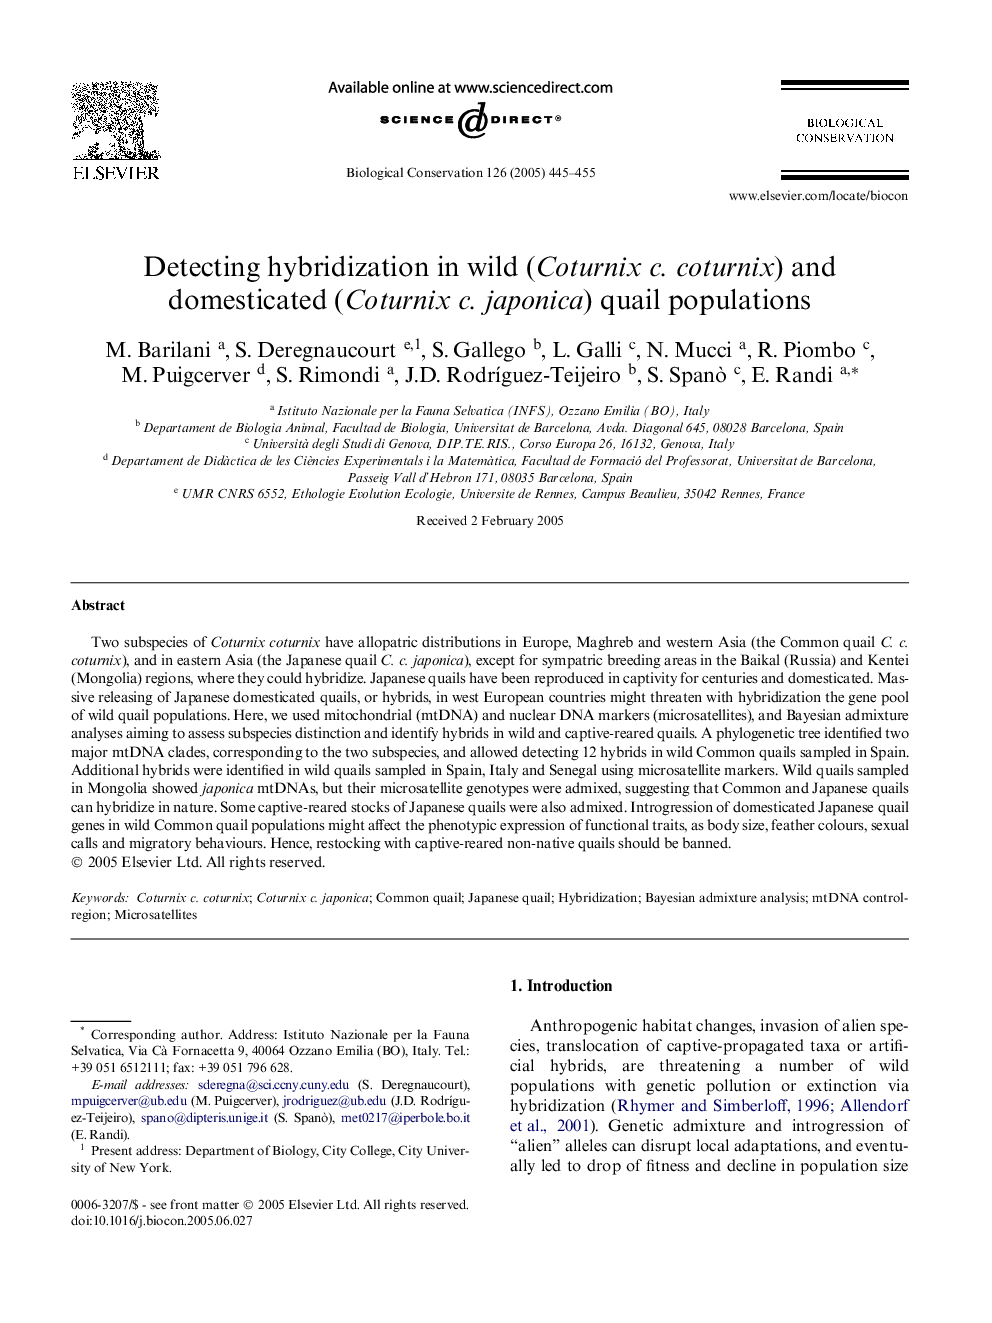 Detecting hybridization in wild (Coturnix c. coturnix) and domesticated (Coturnix c. japonica) quail populations